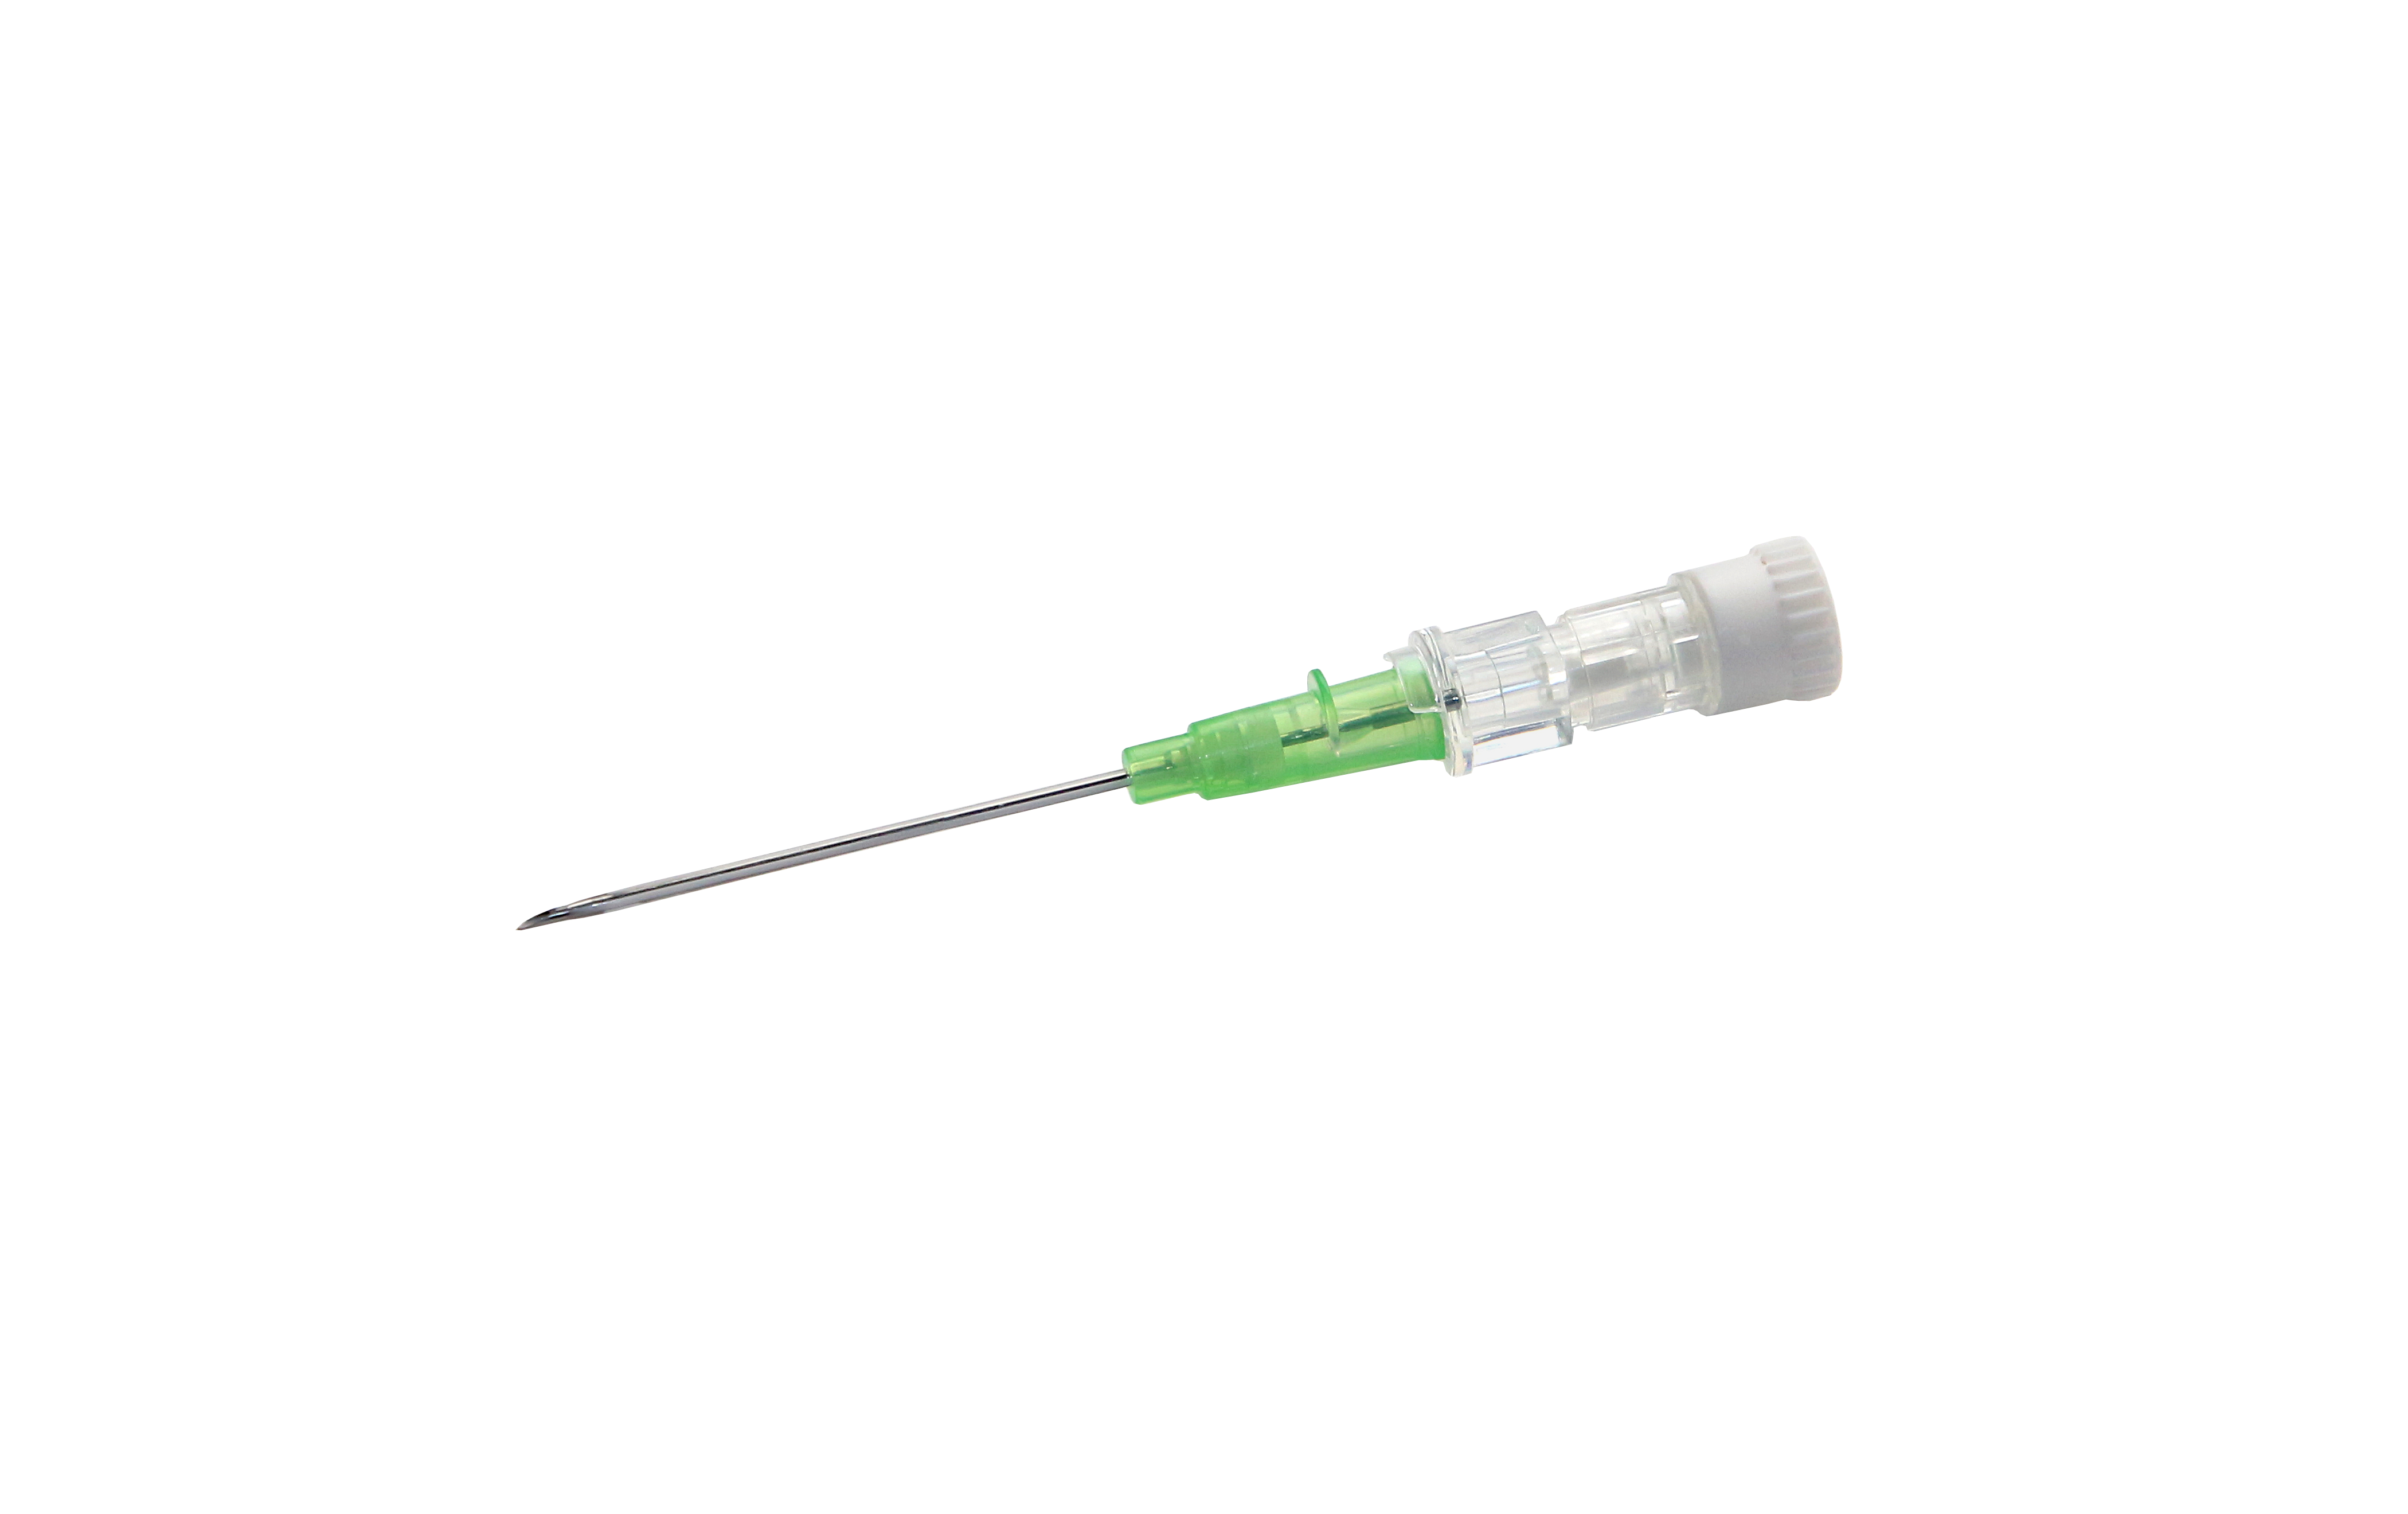 IV Catheter Adapter Surflo Injection Plug Luer Lock Each By Terumo